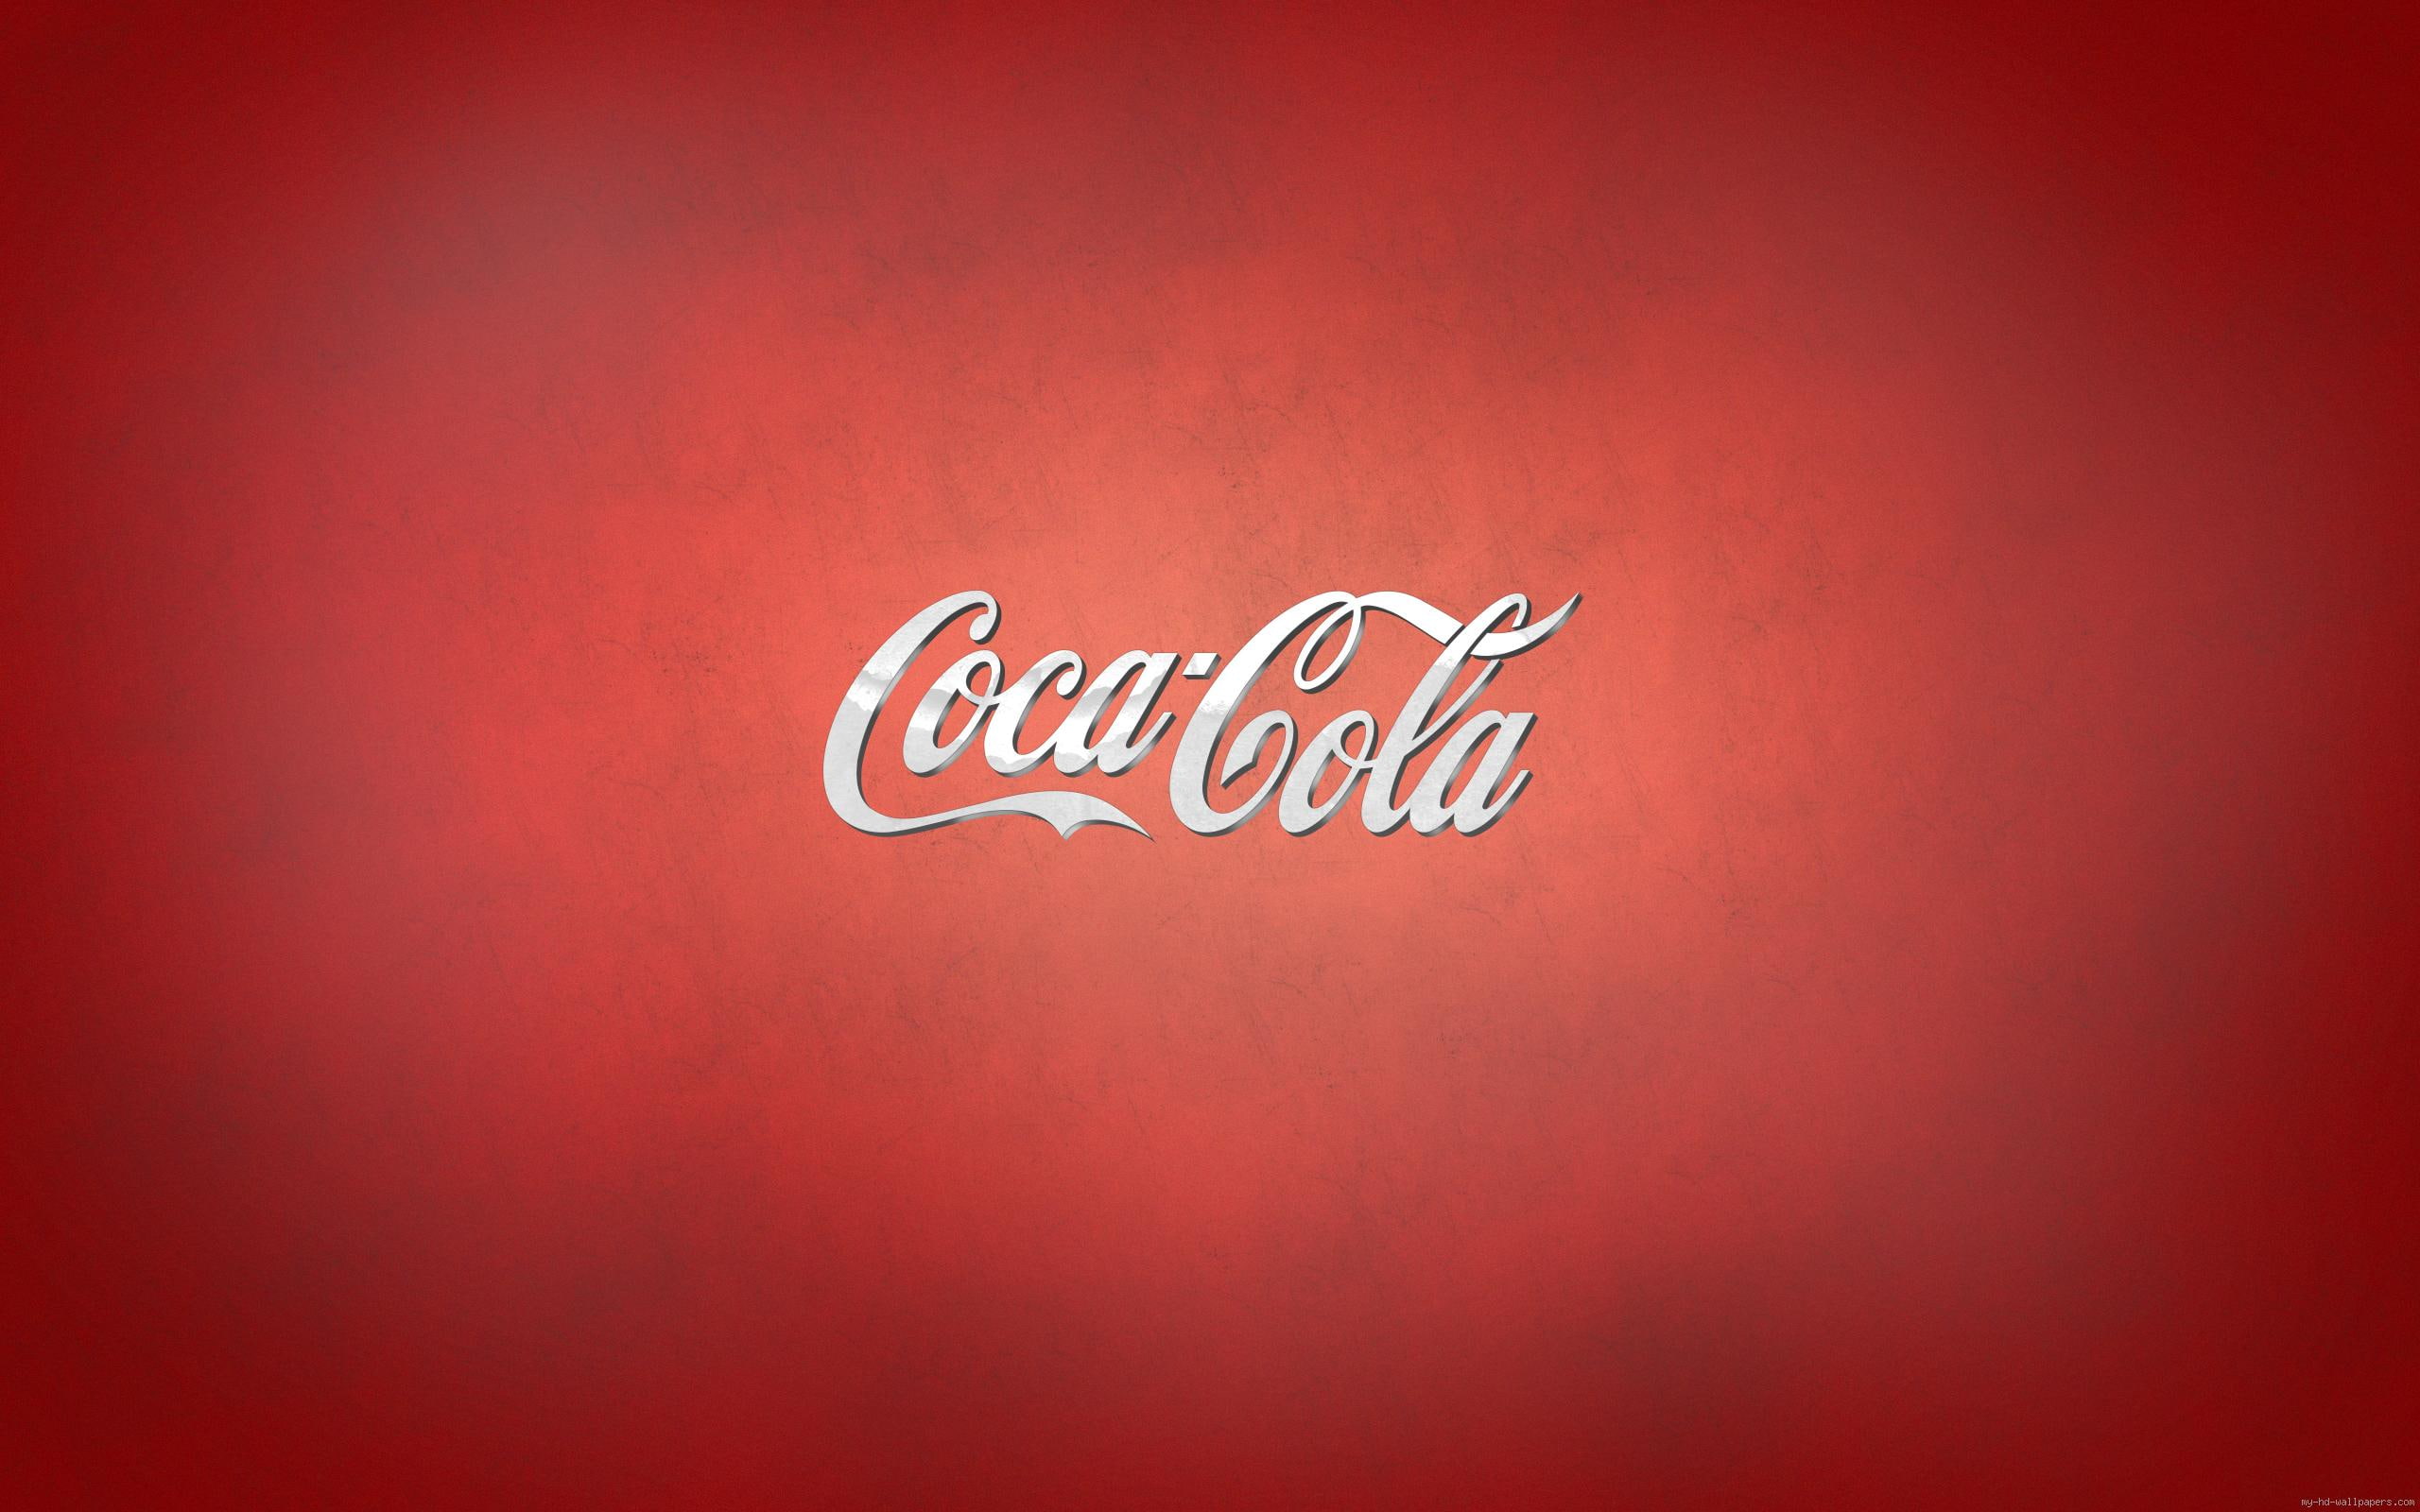 Coca Cola logo on red background, coca cola logo, brand